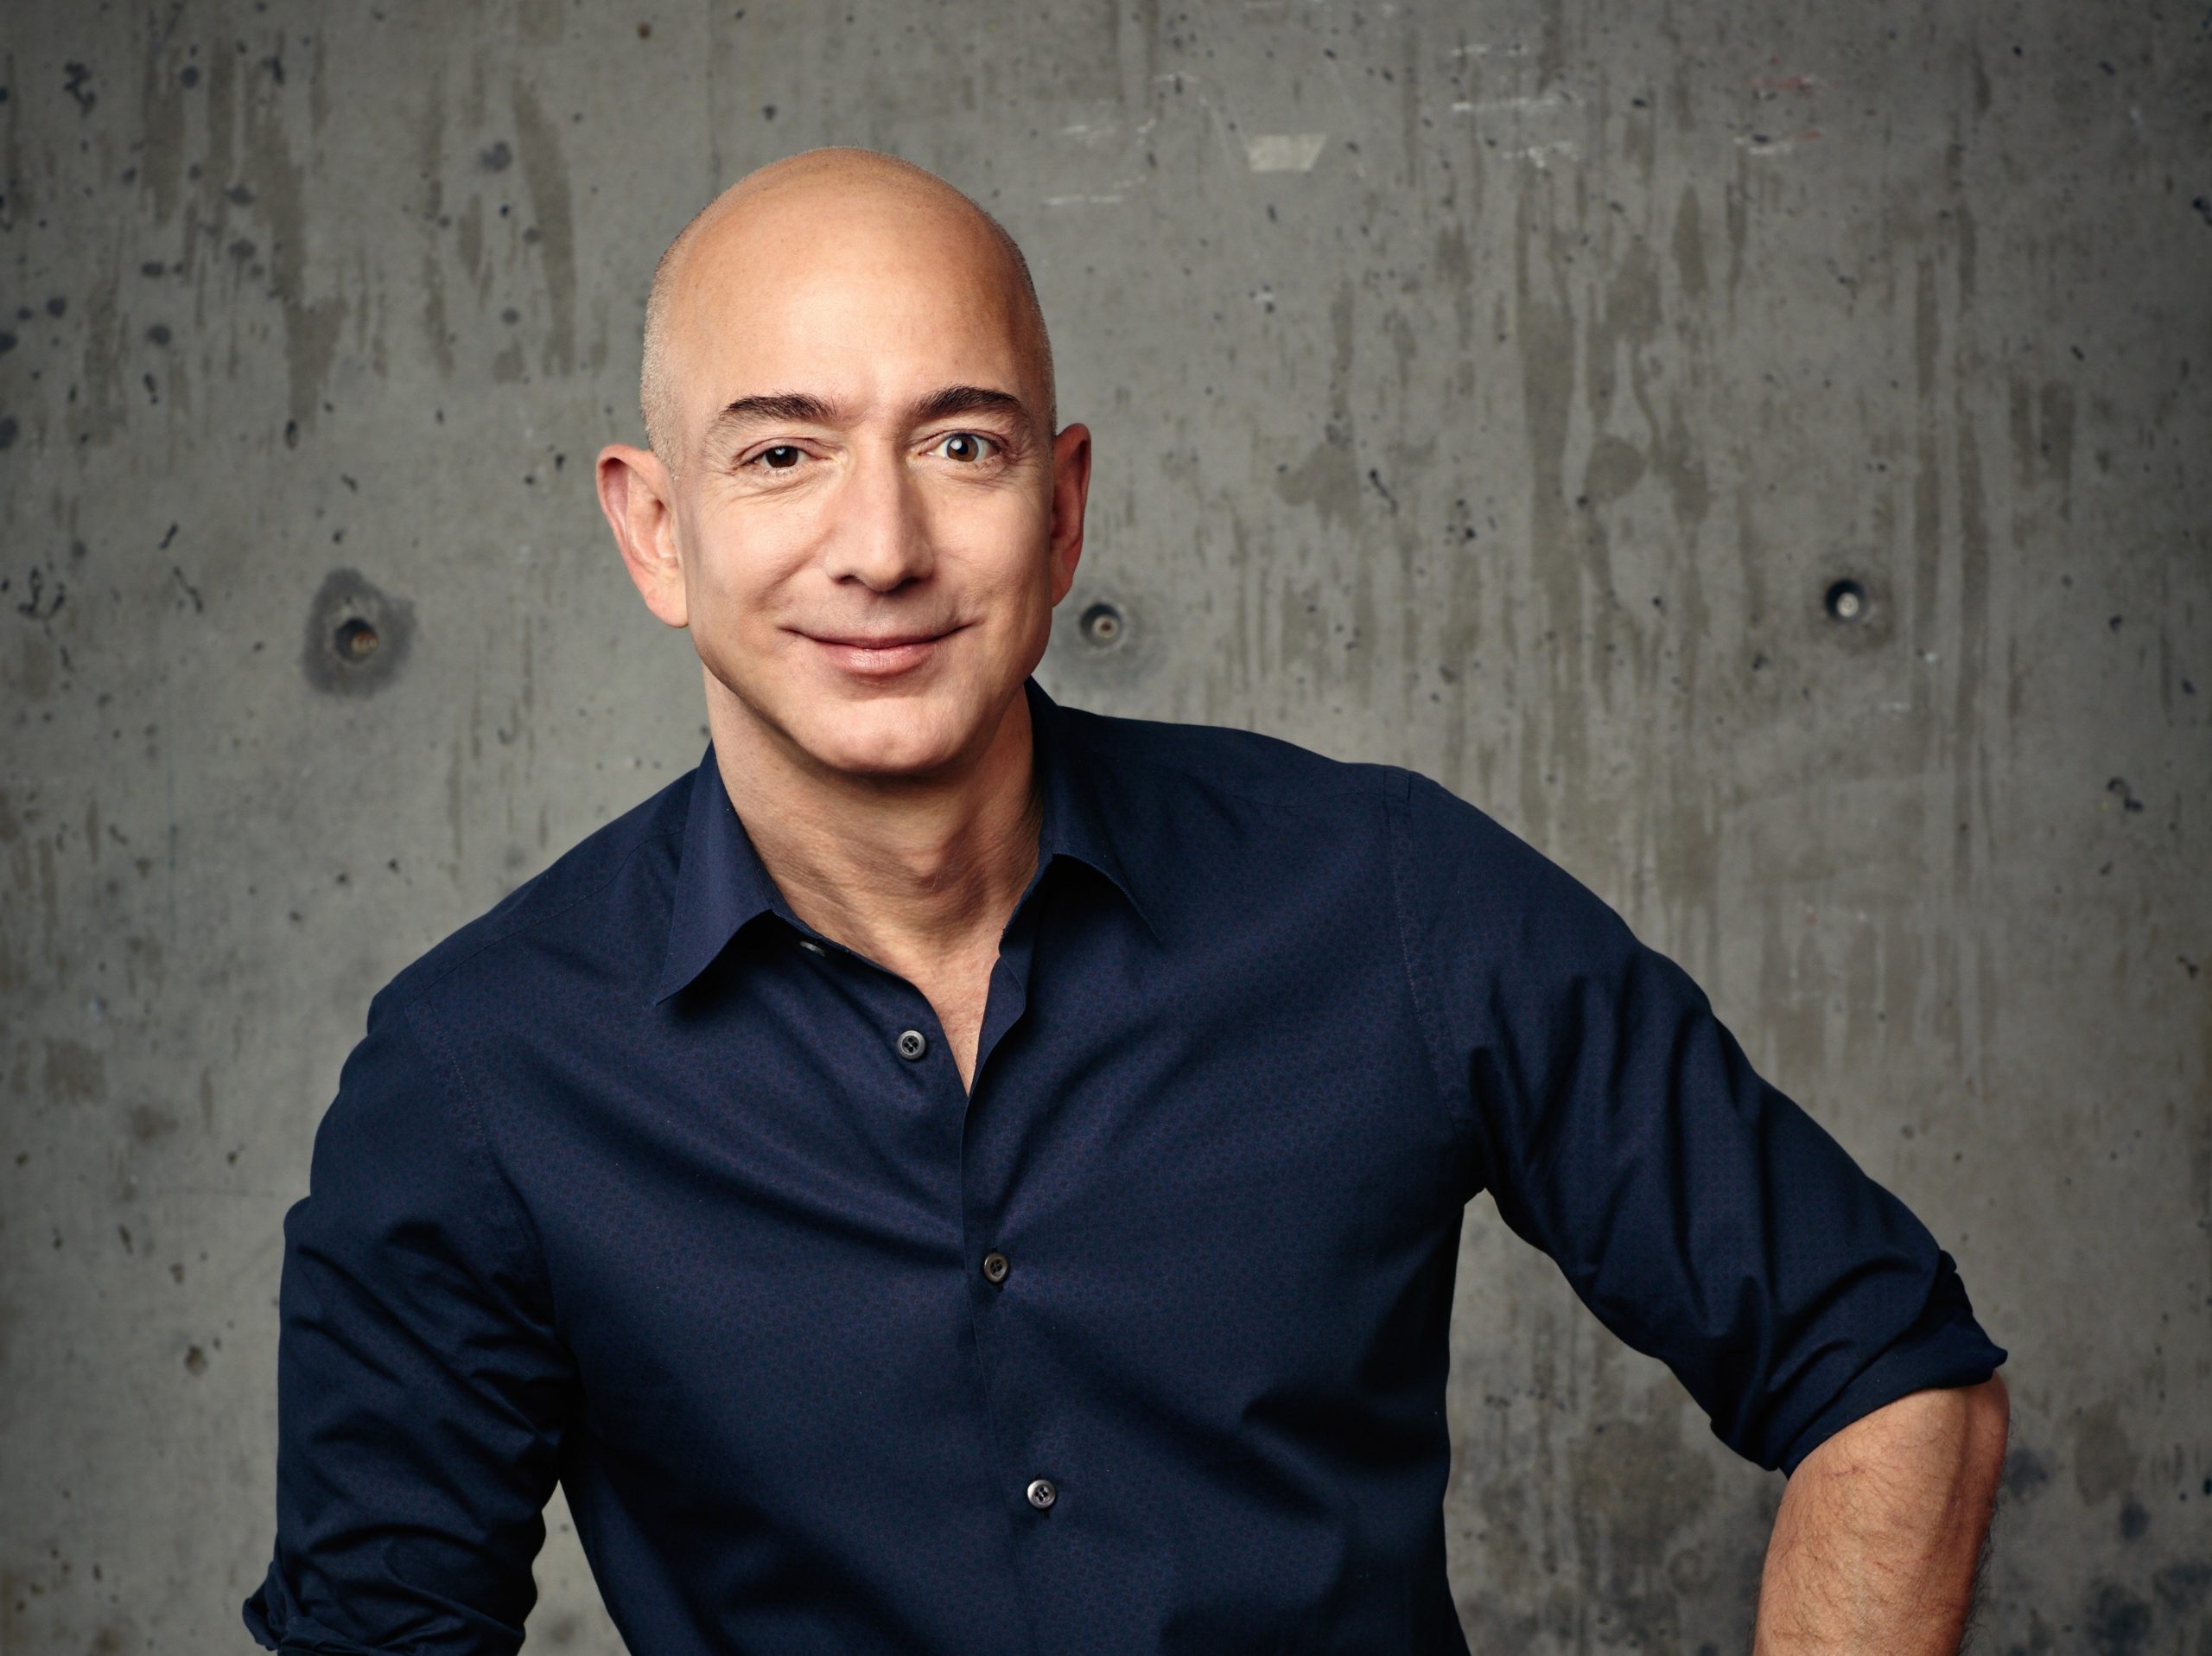 Amazon’s billionaire founder Jeff Bezos to fly to space